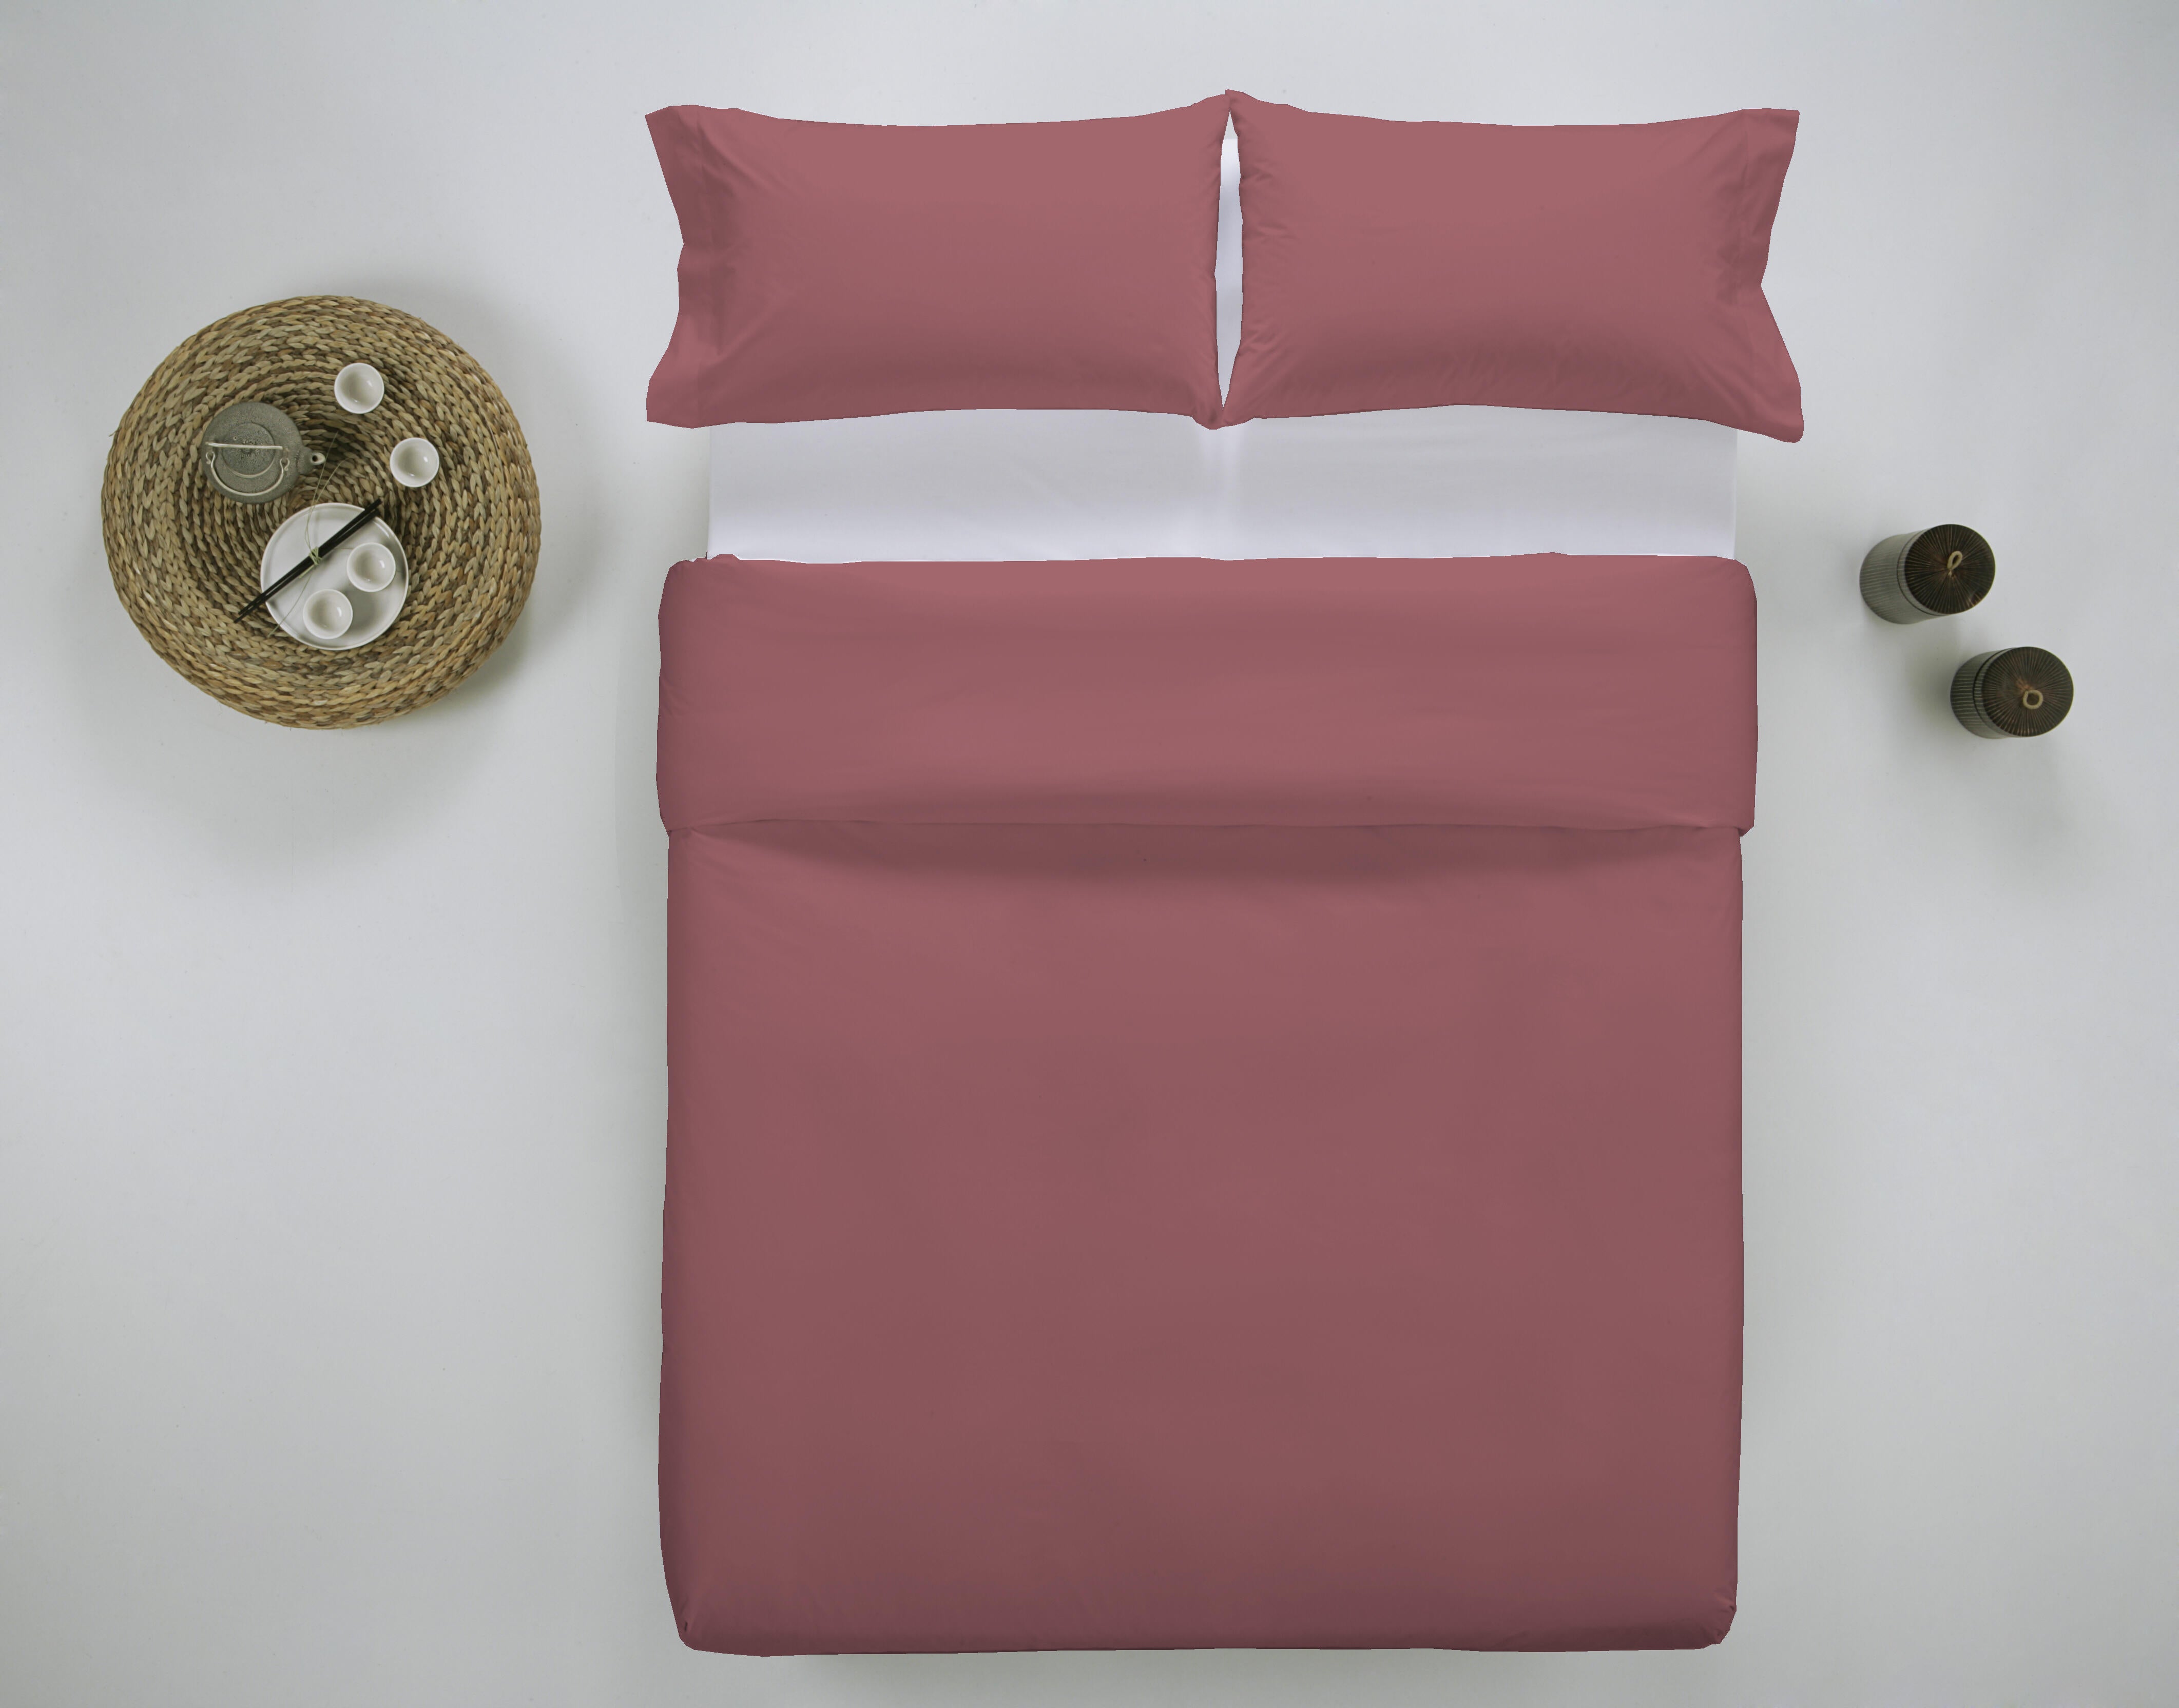 Funda nórdica wash grament lisa algodón 200 hilos rojo ahumado cama de 200 cm